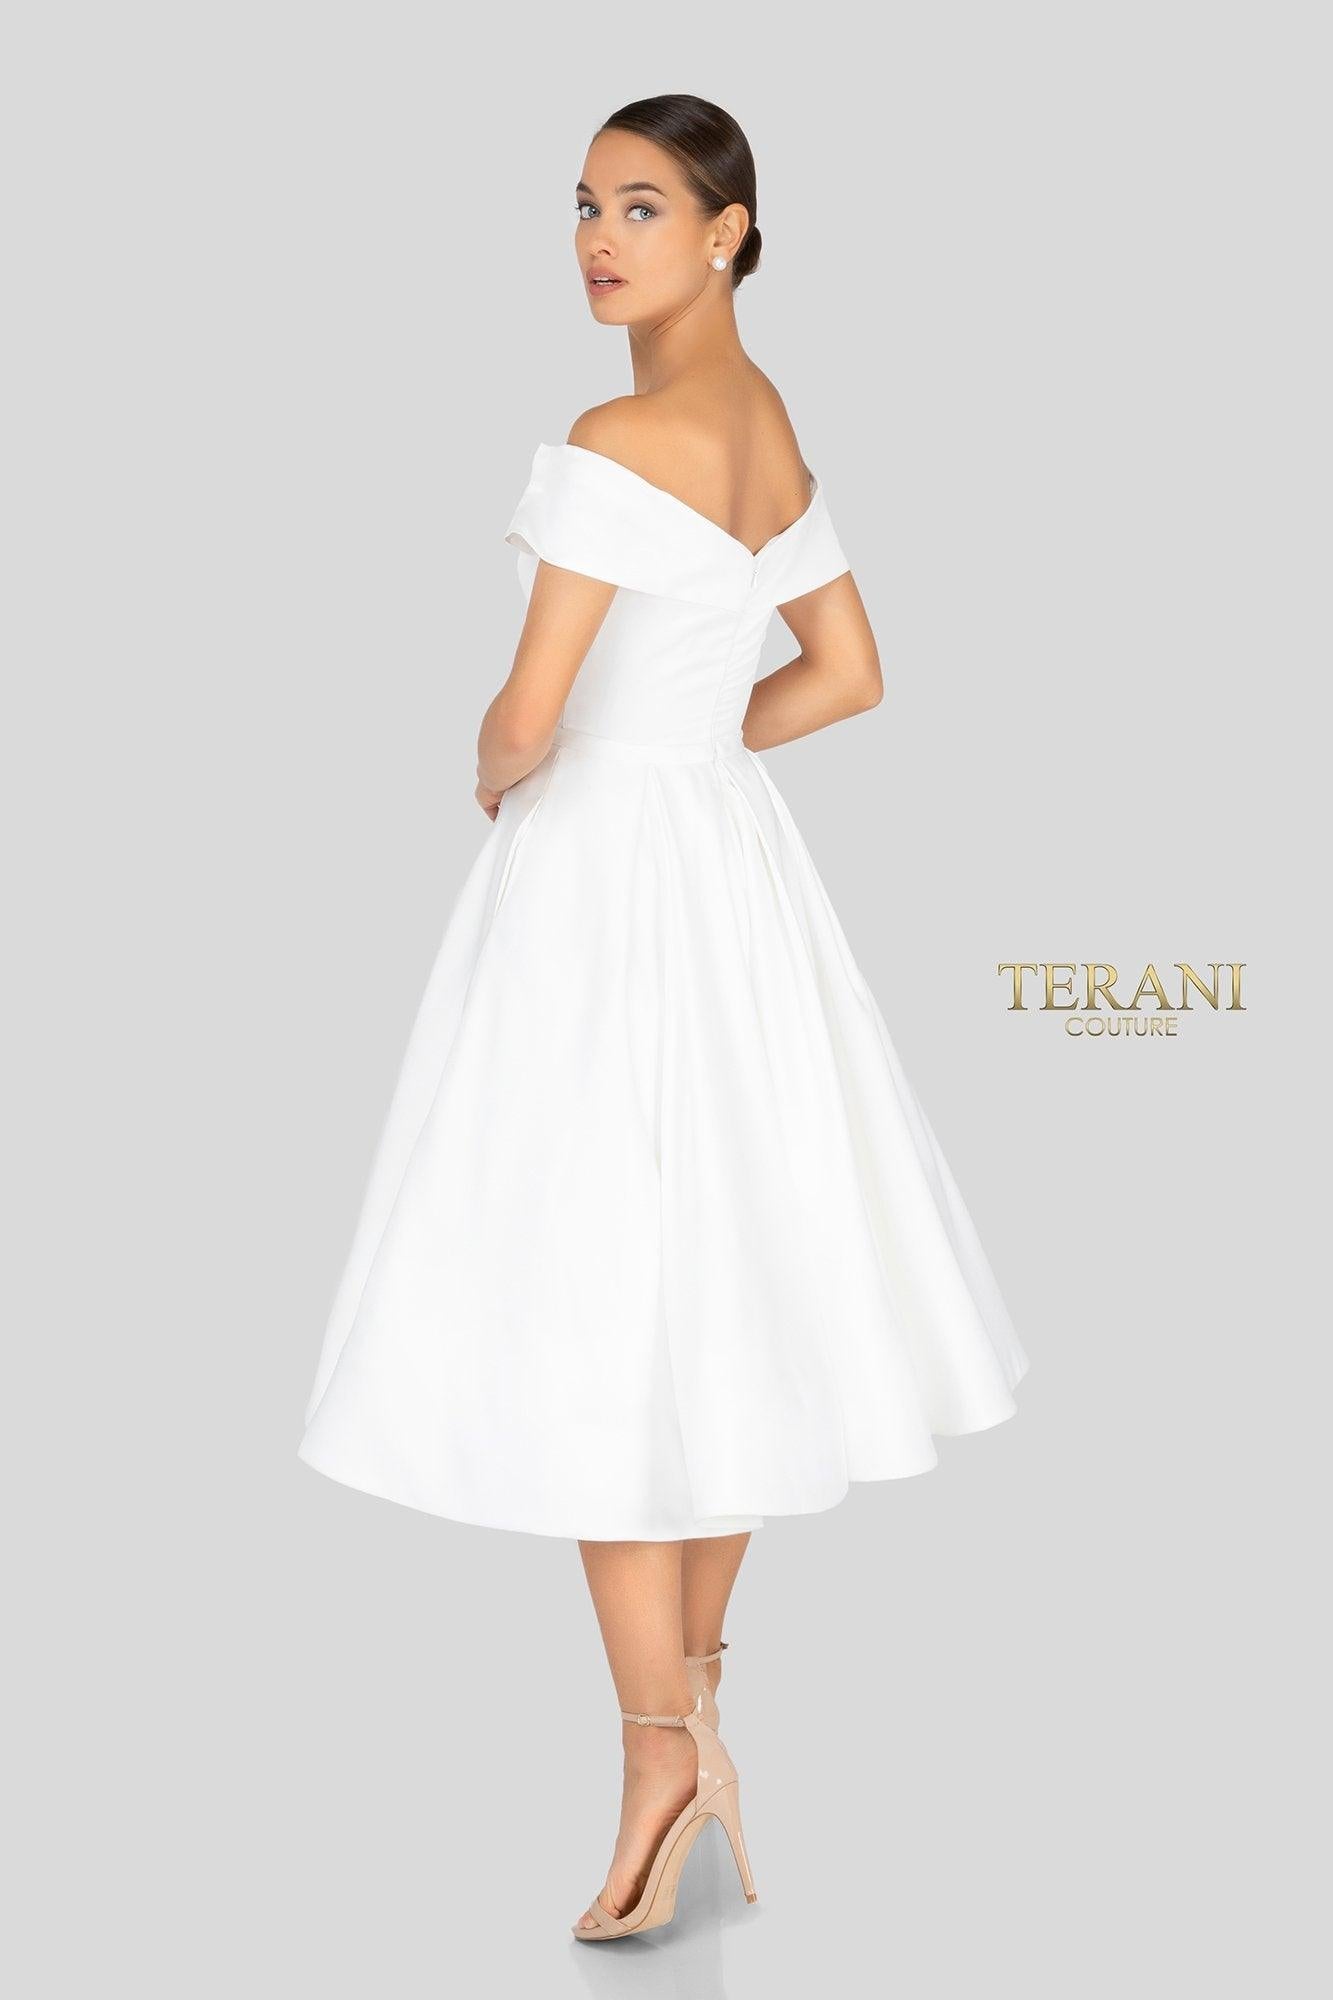 Terani Couture Off Shoulder Short Dress 1912C9656 - The Dress Outlet